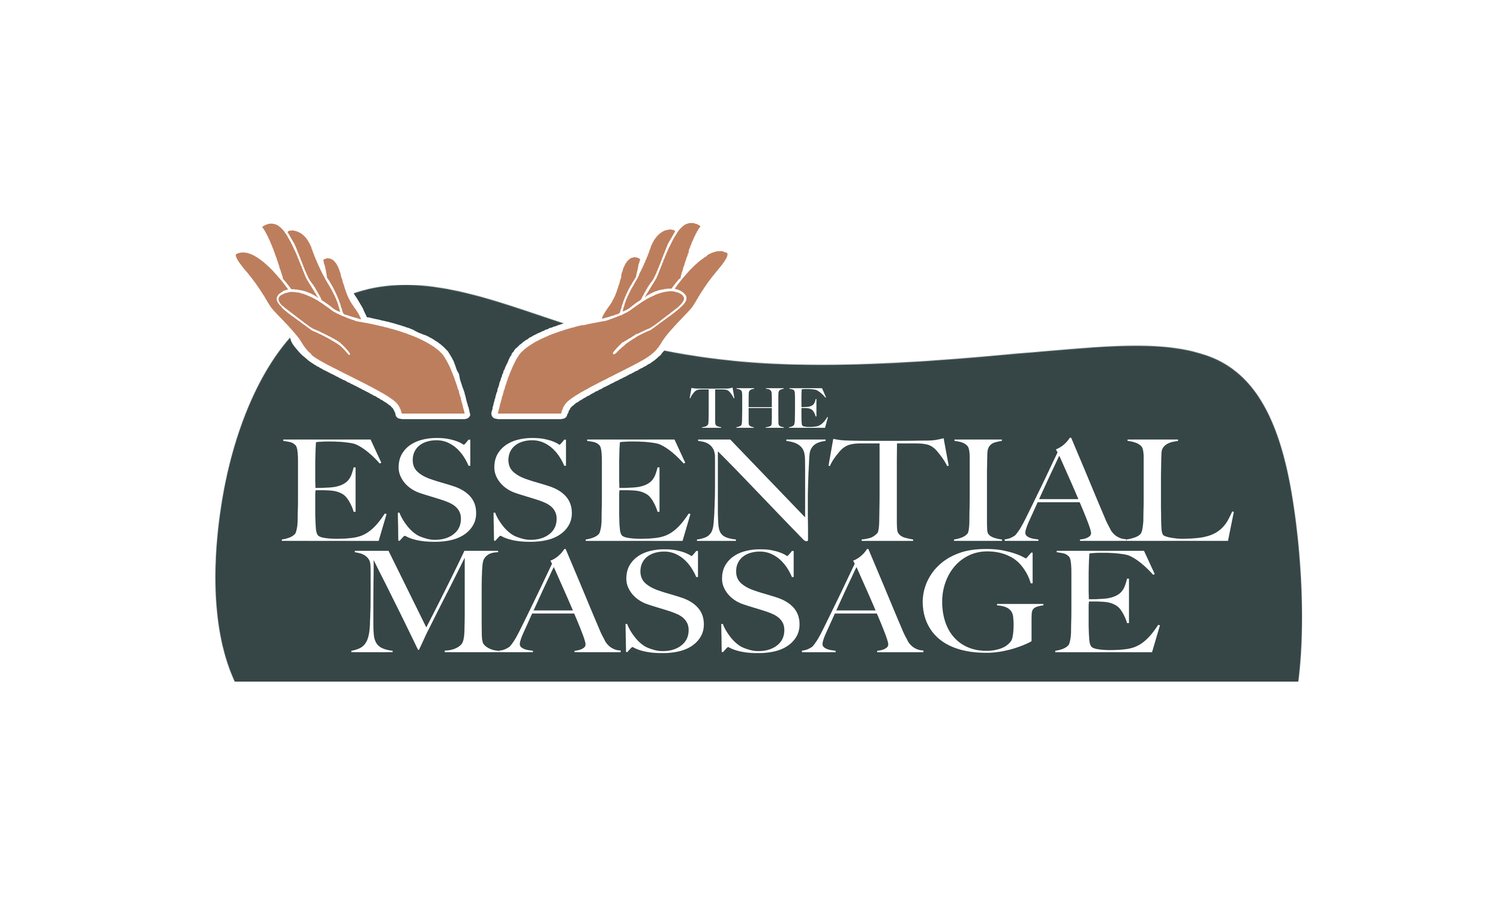 The Essential Massage